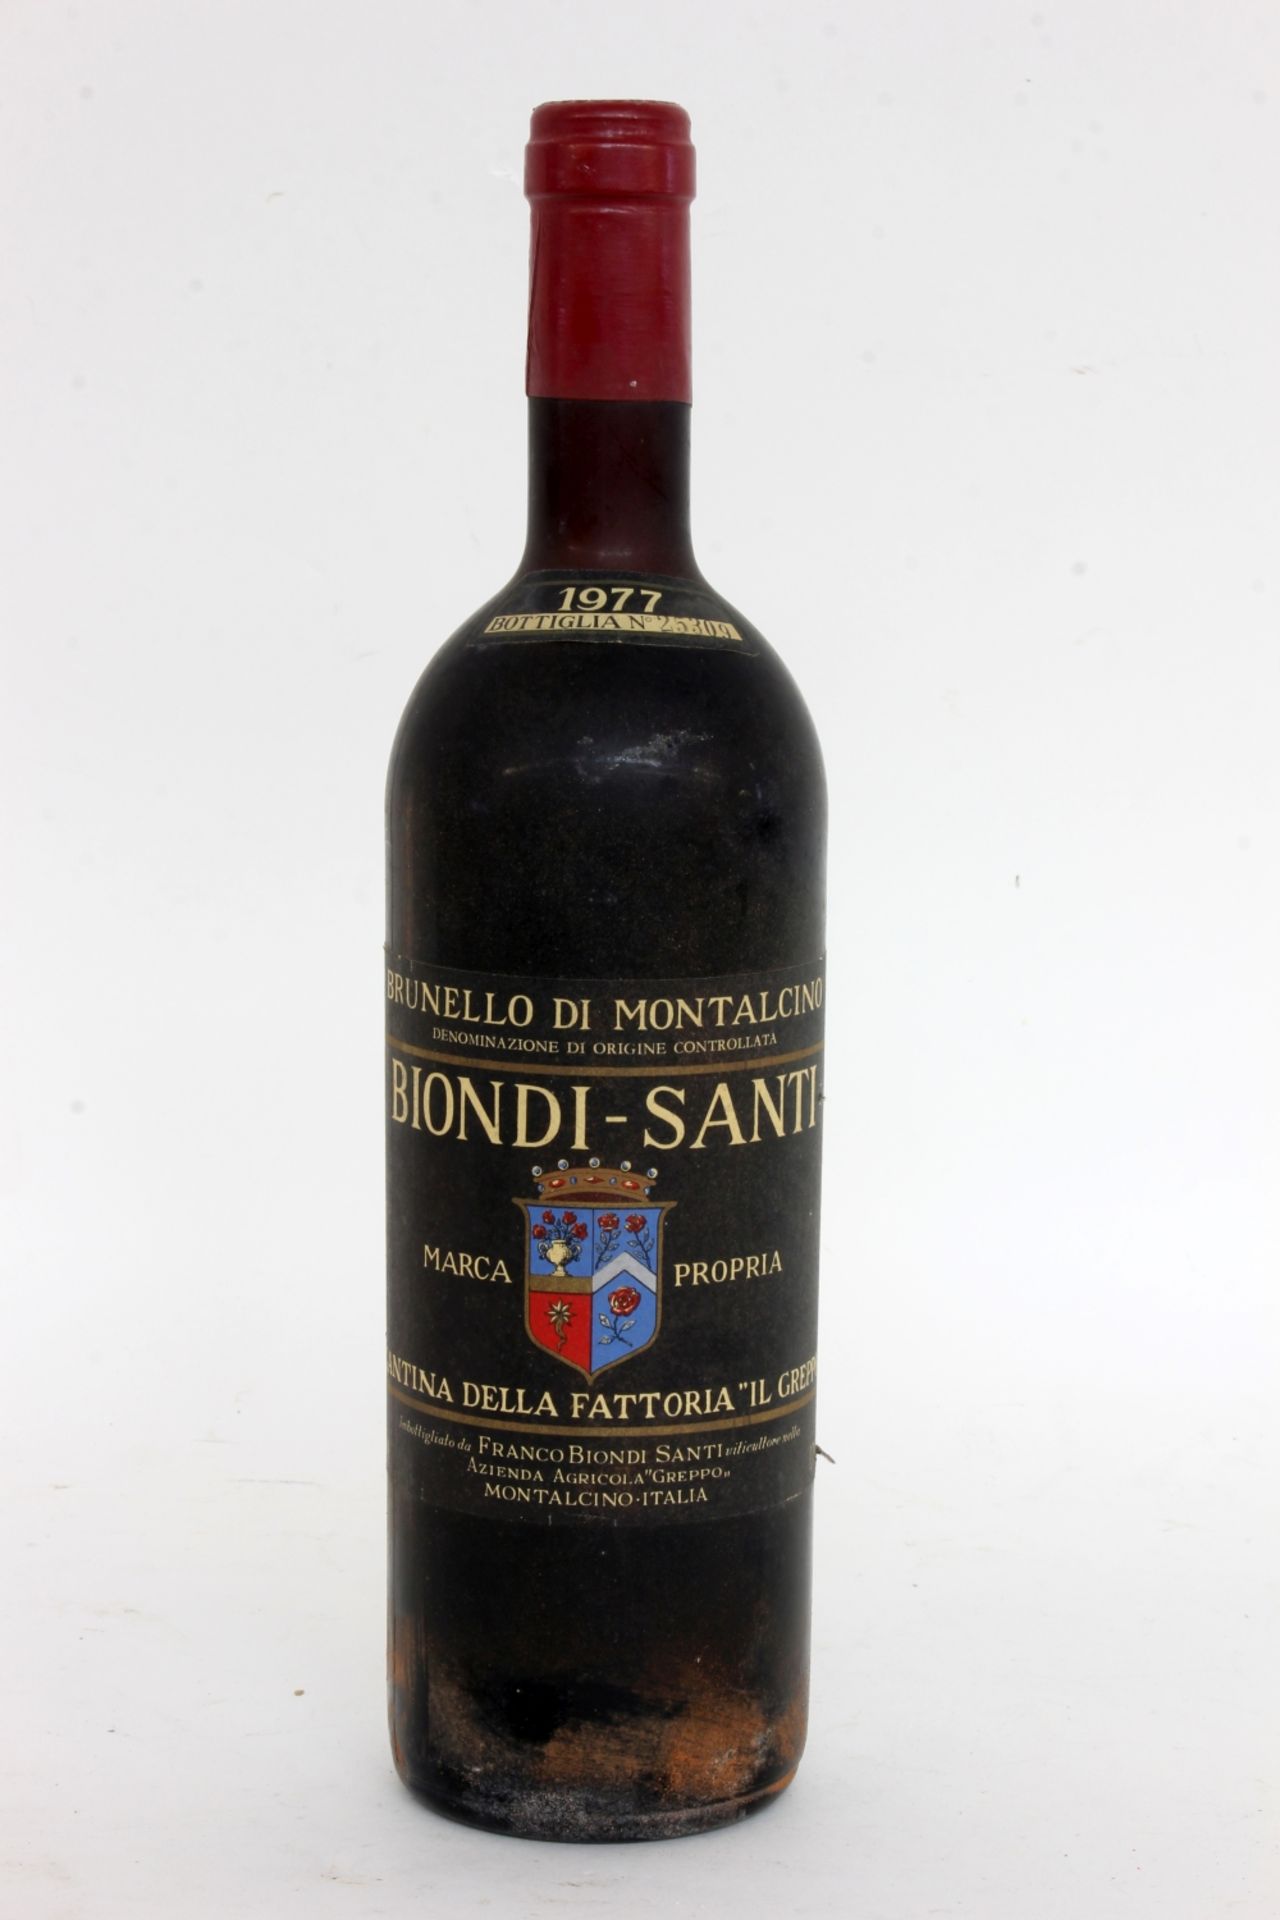 BIONDI-SANTI 1977 Brunello di